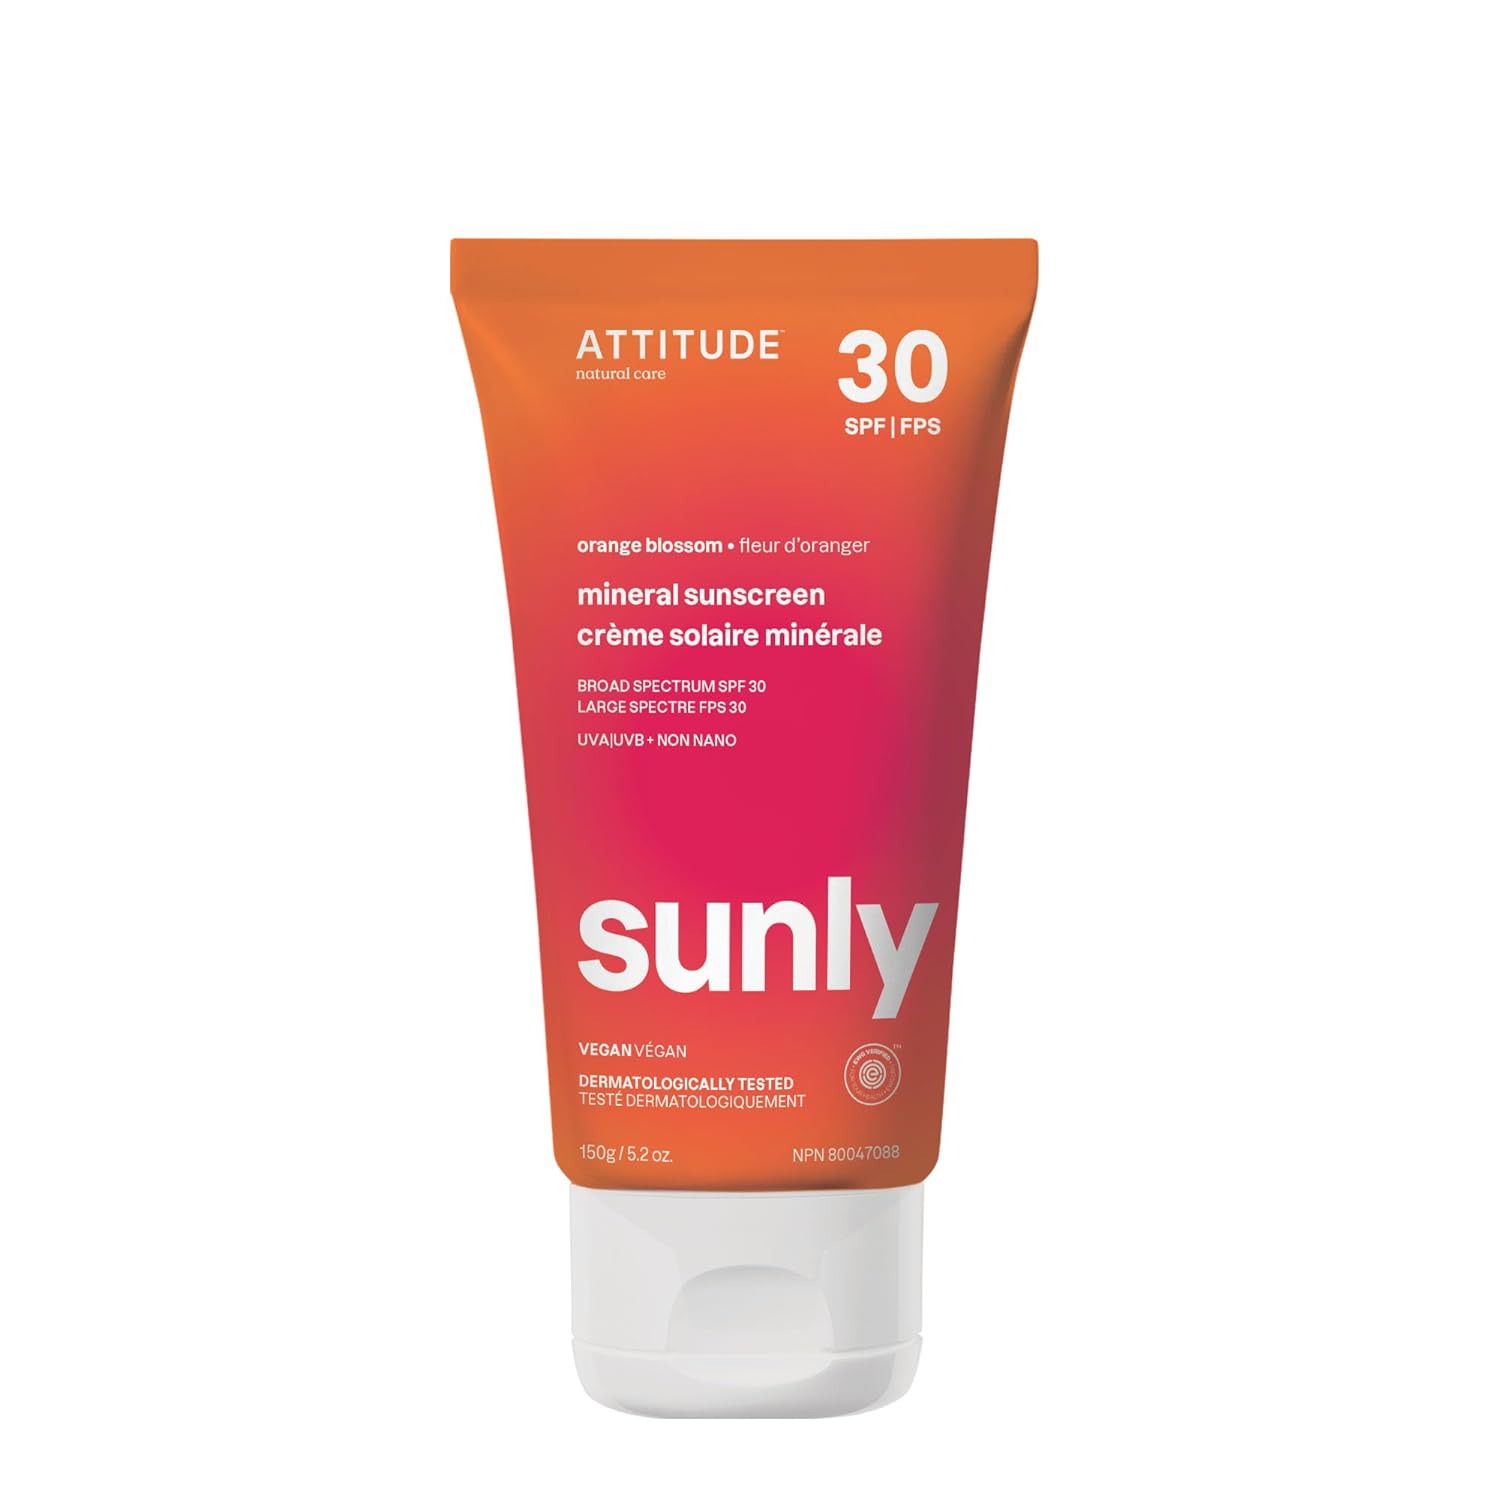 ATTITUDE Mineral Sunscreen with Zinc Oxide, SPF 30, EWG Verified, Broad Spectrum UVA/UVB Protection, Dermatologically Tested, Vegan, Orange Blossom, 5.2 Ounces